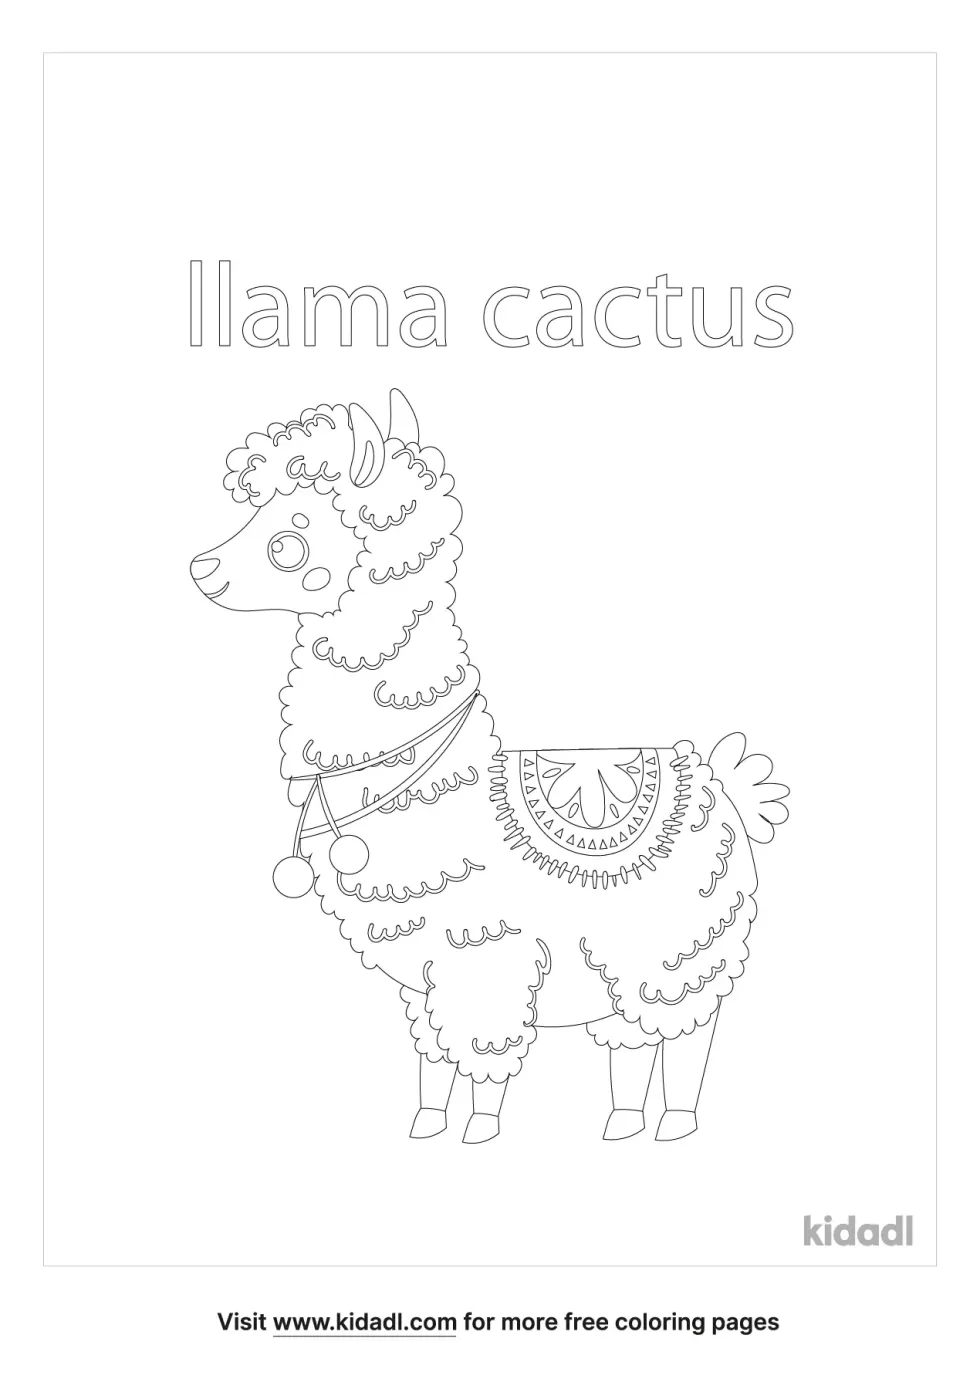 Llama Cactus